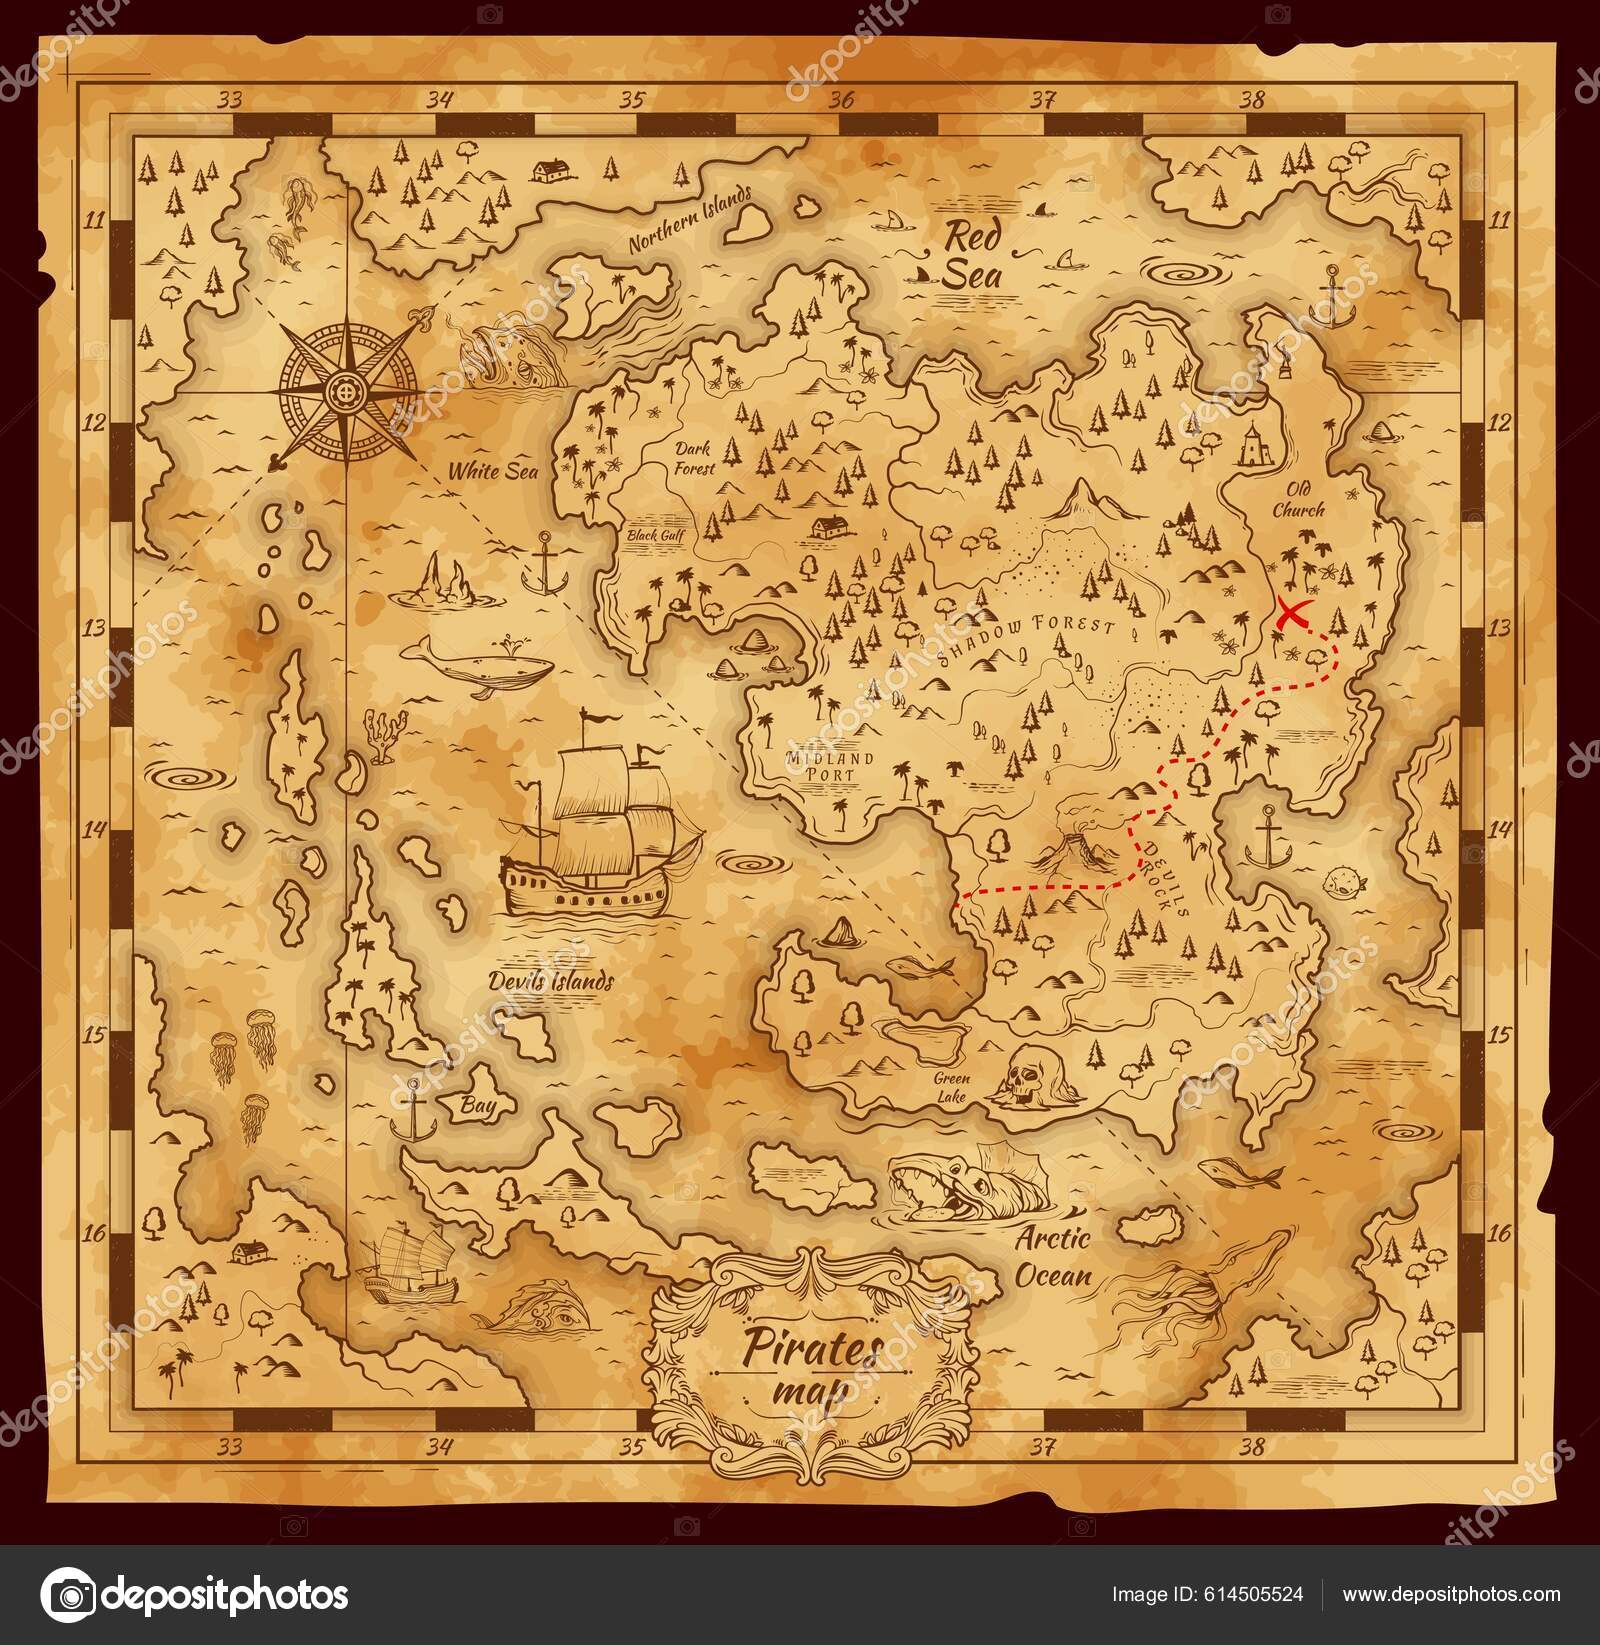 Fundo do vintage do mapa do tesouro do pirata